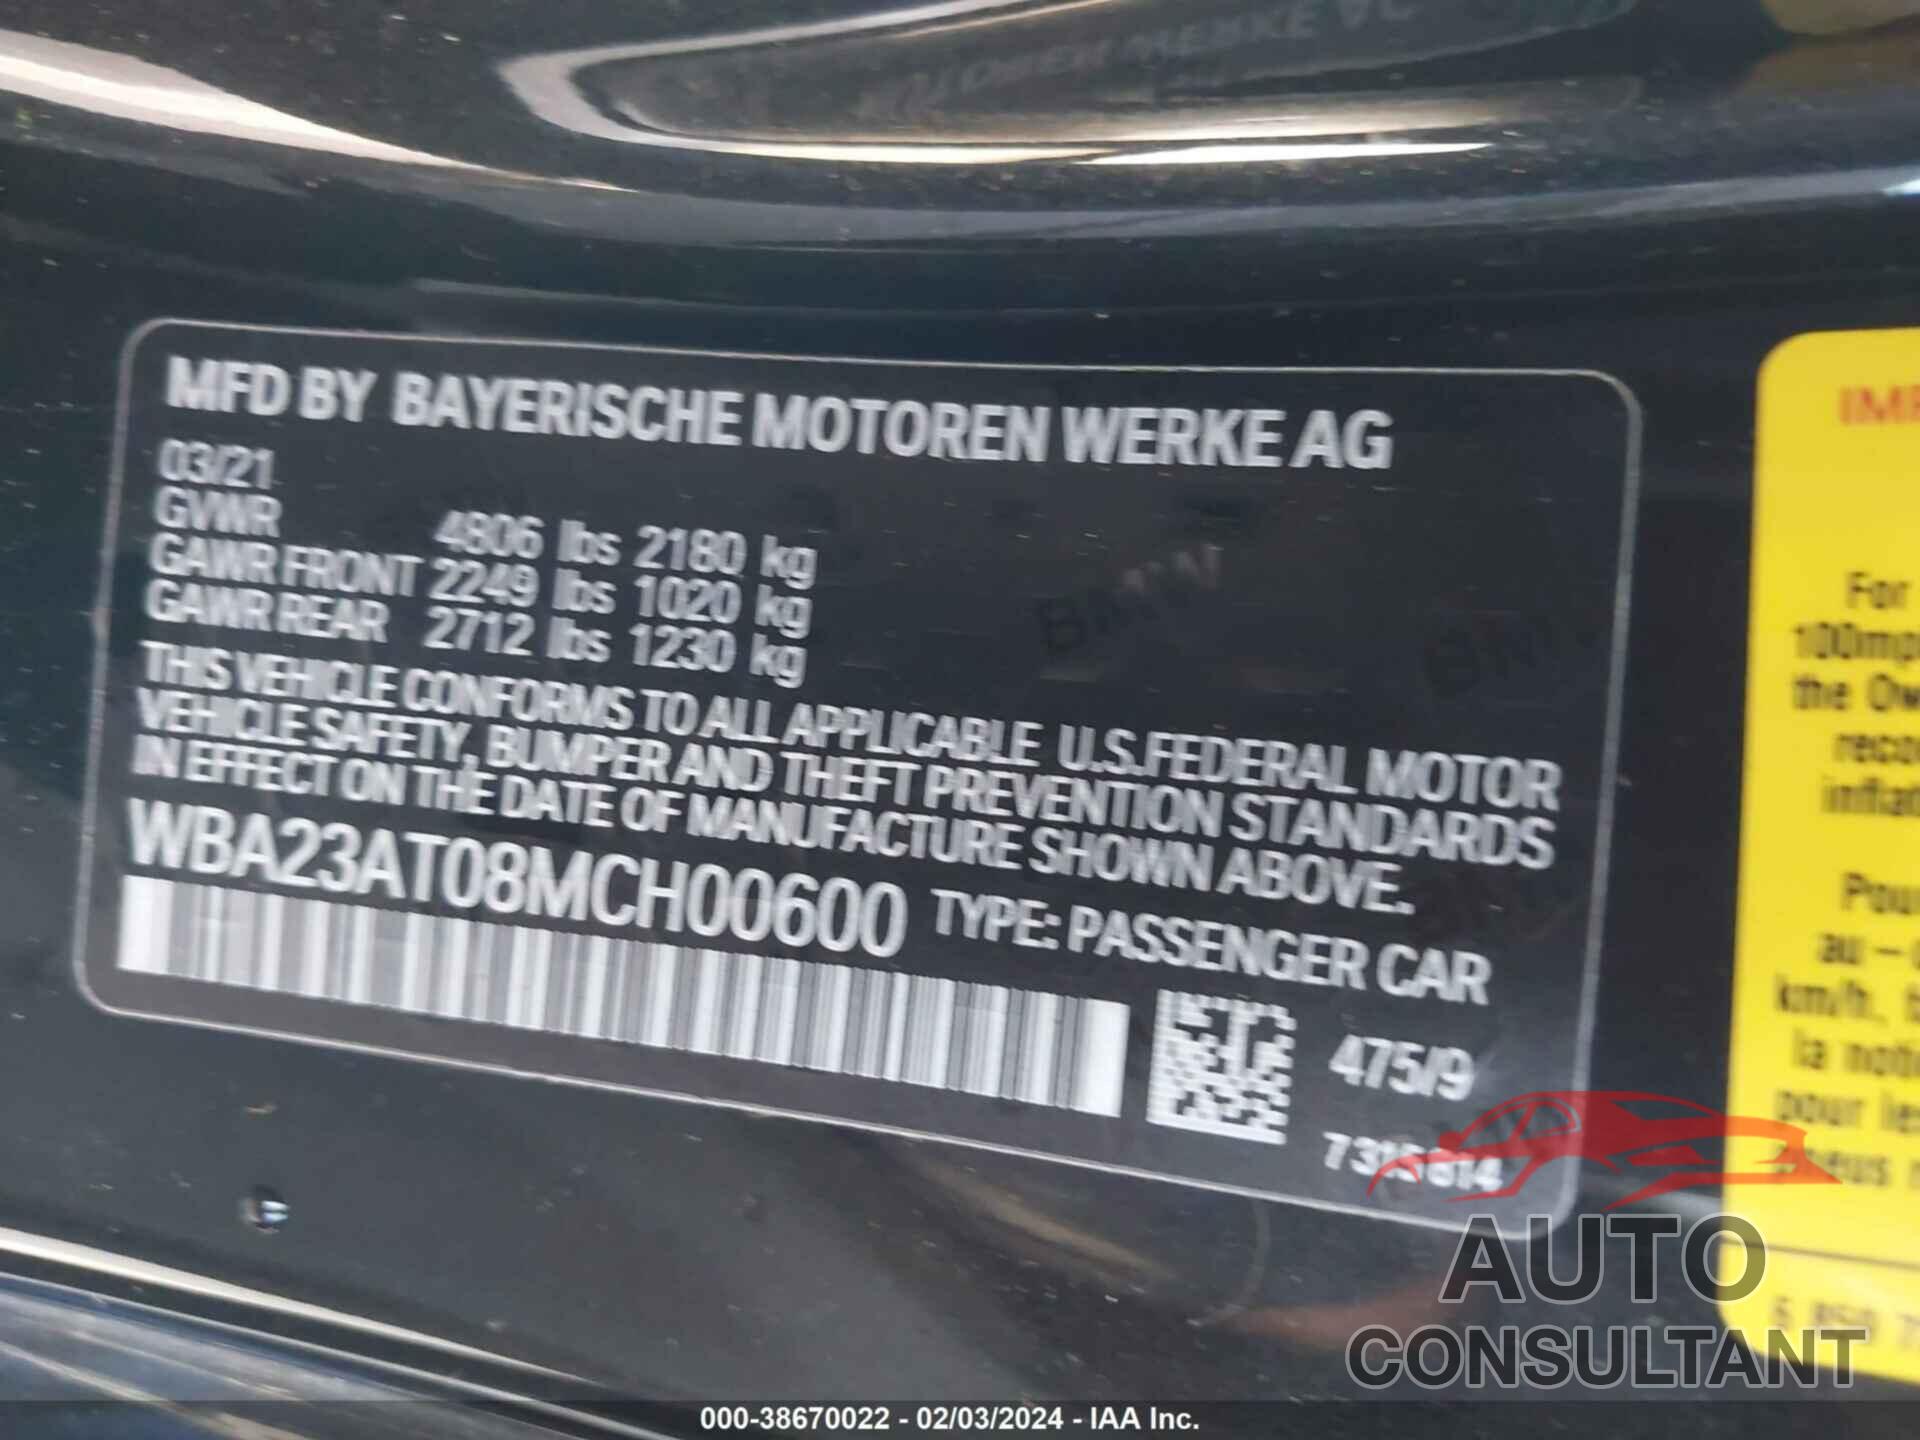 BMW 430I 2021 - WBA23AT08MCH00600